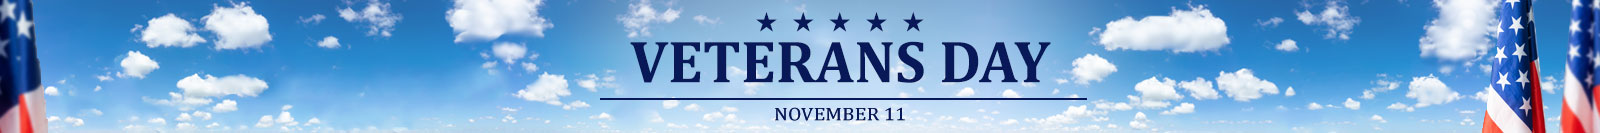 Veterans Day is November 11th